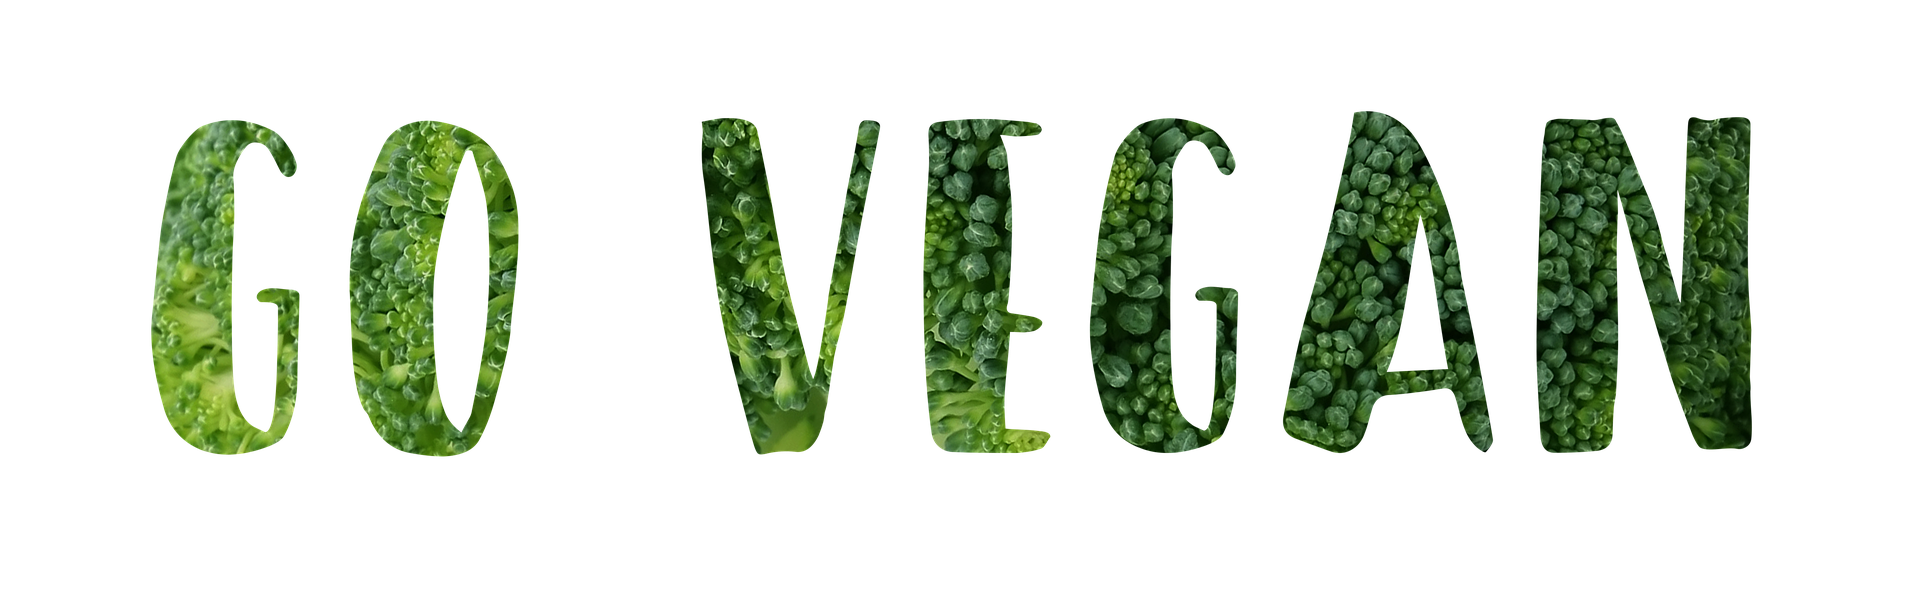 Vegan banner